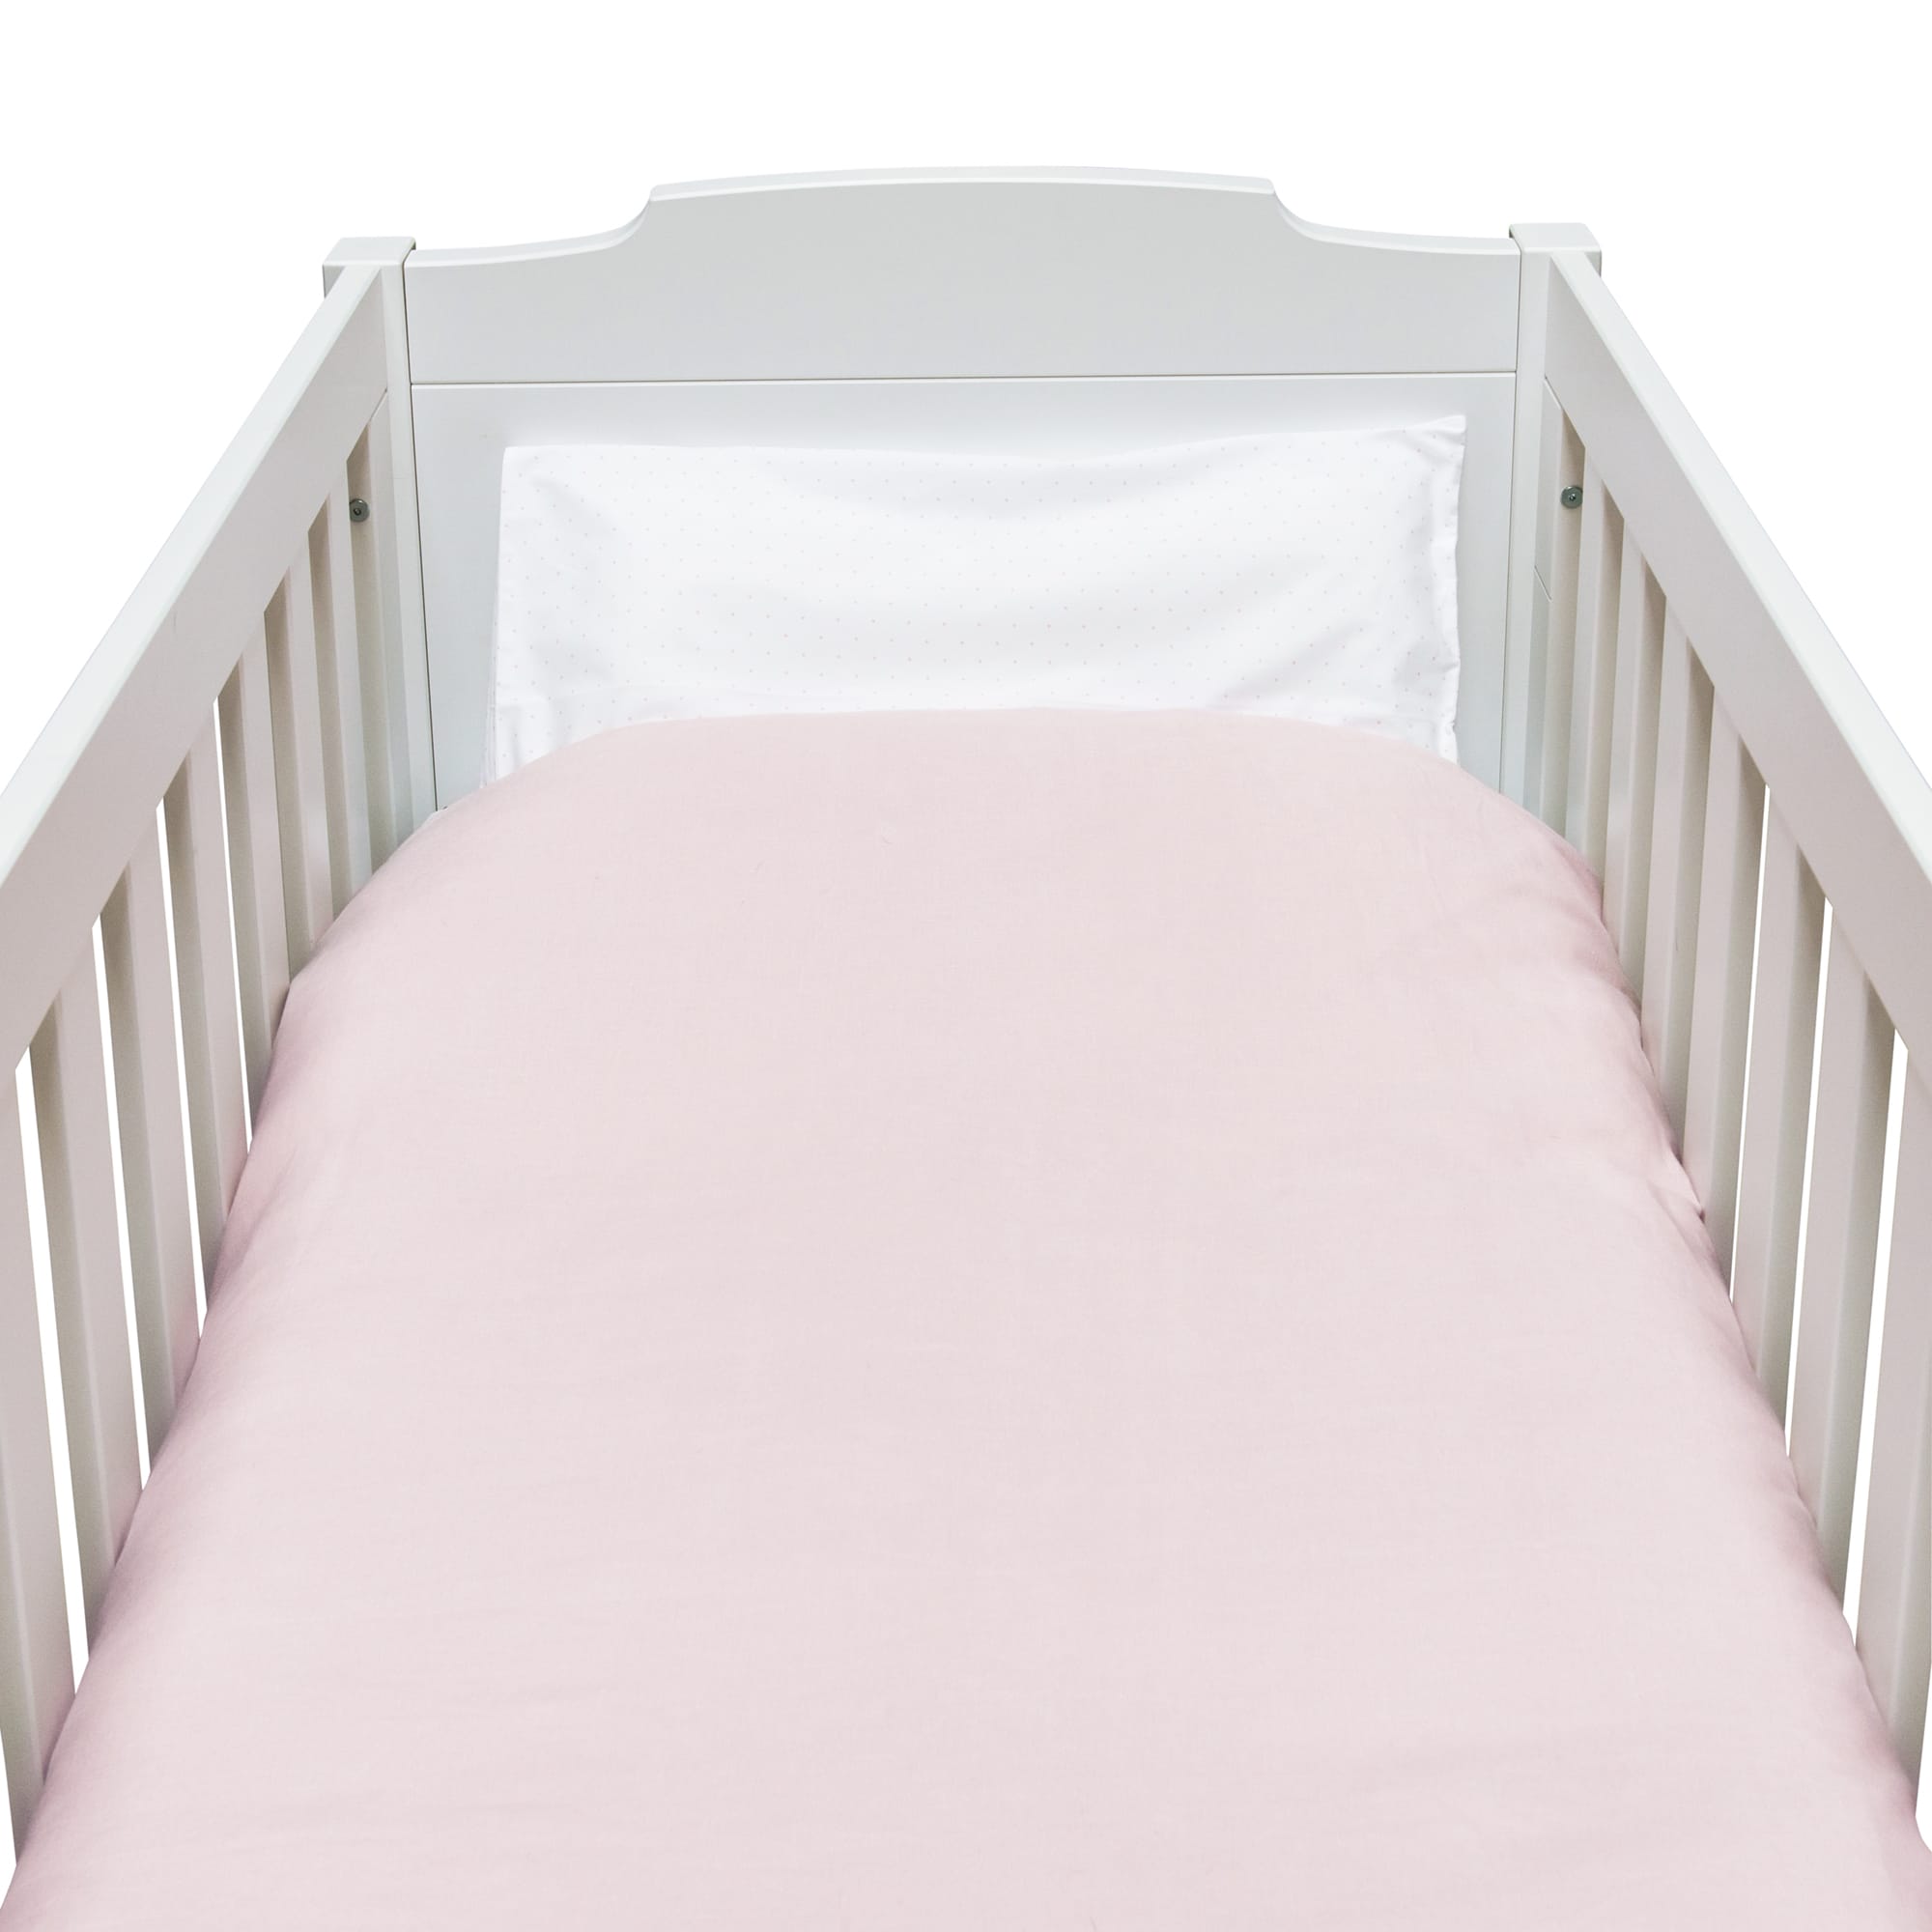 Baby Cot Bed Duvet Cover Theophile Et Patachou